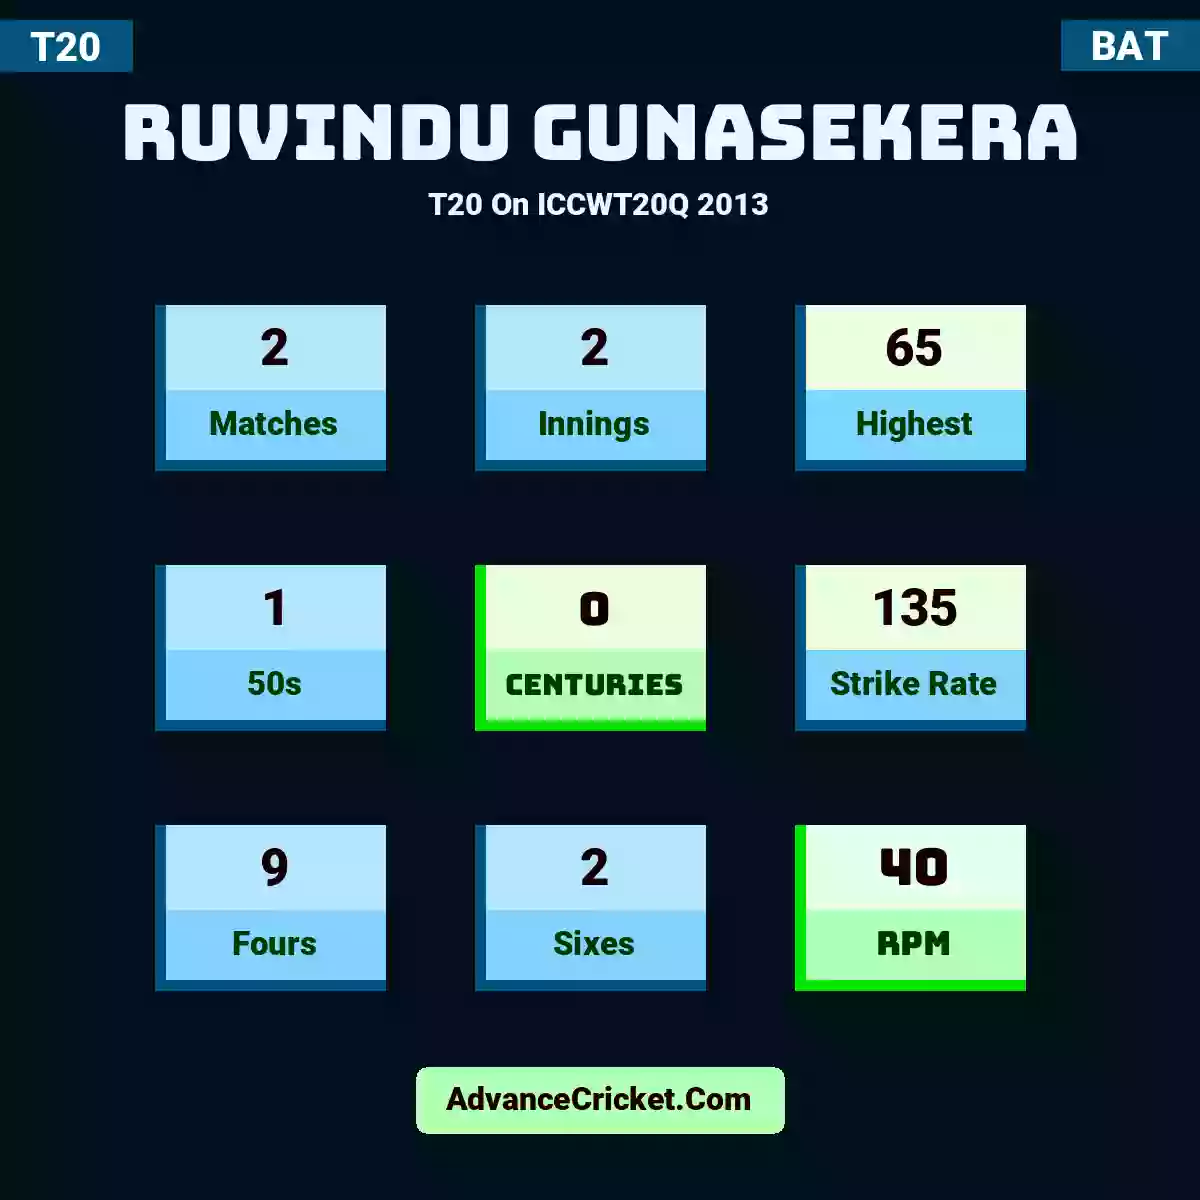 Ruvindu Gunasekera T20  On ICCWT20Q 2013, Ruvindu Gunasekera played 2 matches, scored 65 runs as highest, 1 half-centuries, and 0 centuries, with a strike rate of 135. R.Gunasekera hit 9 fours and 2 sixes, with an RPM of 40.